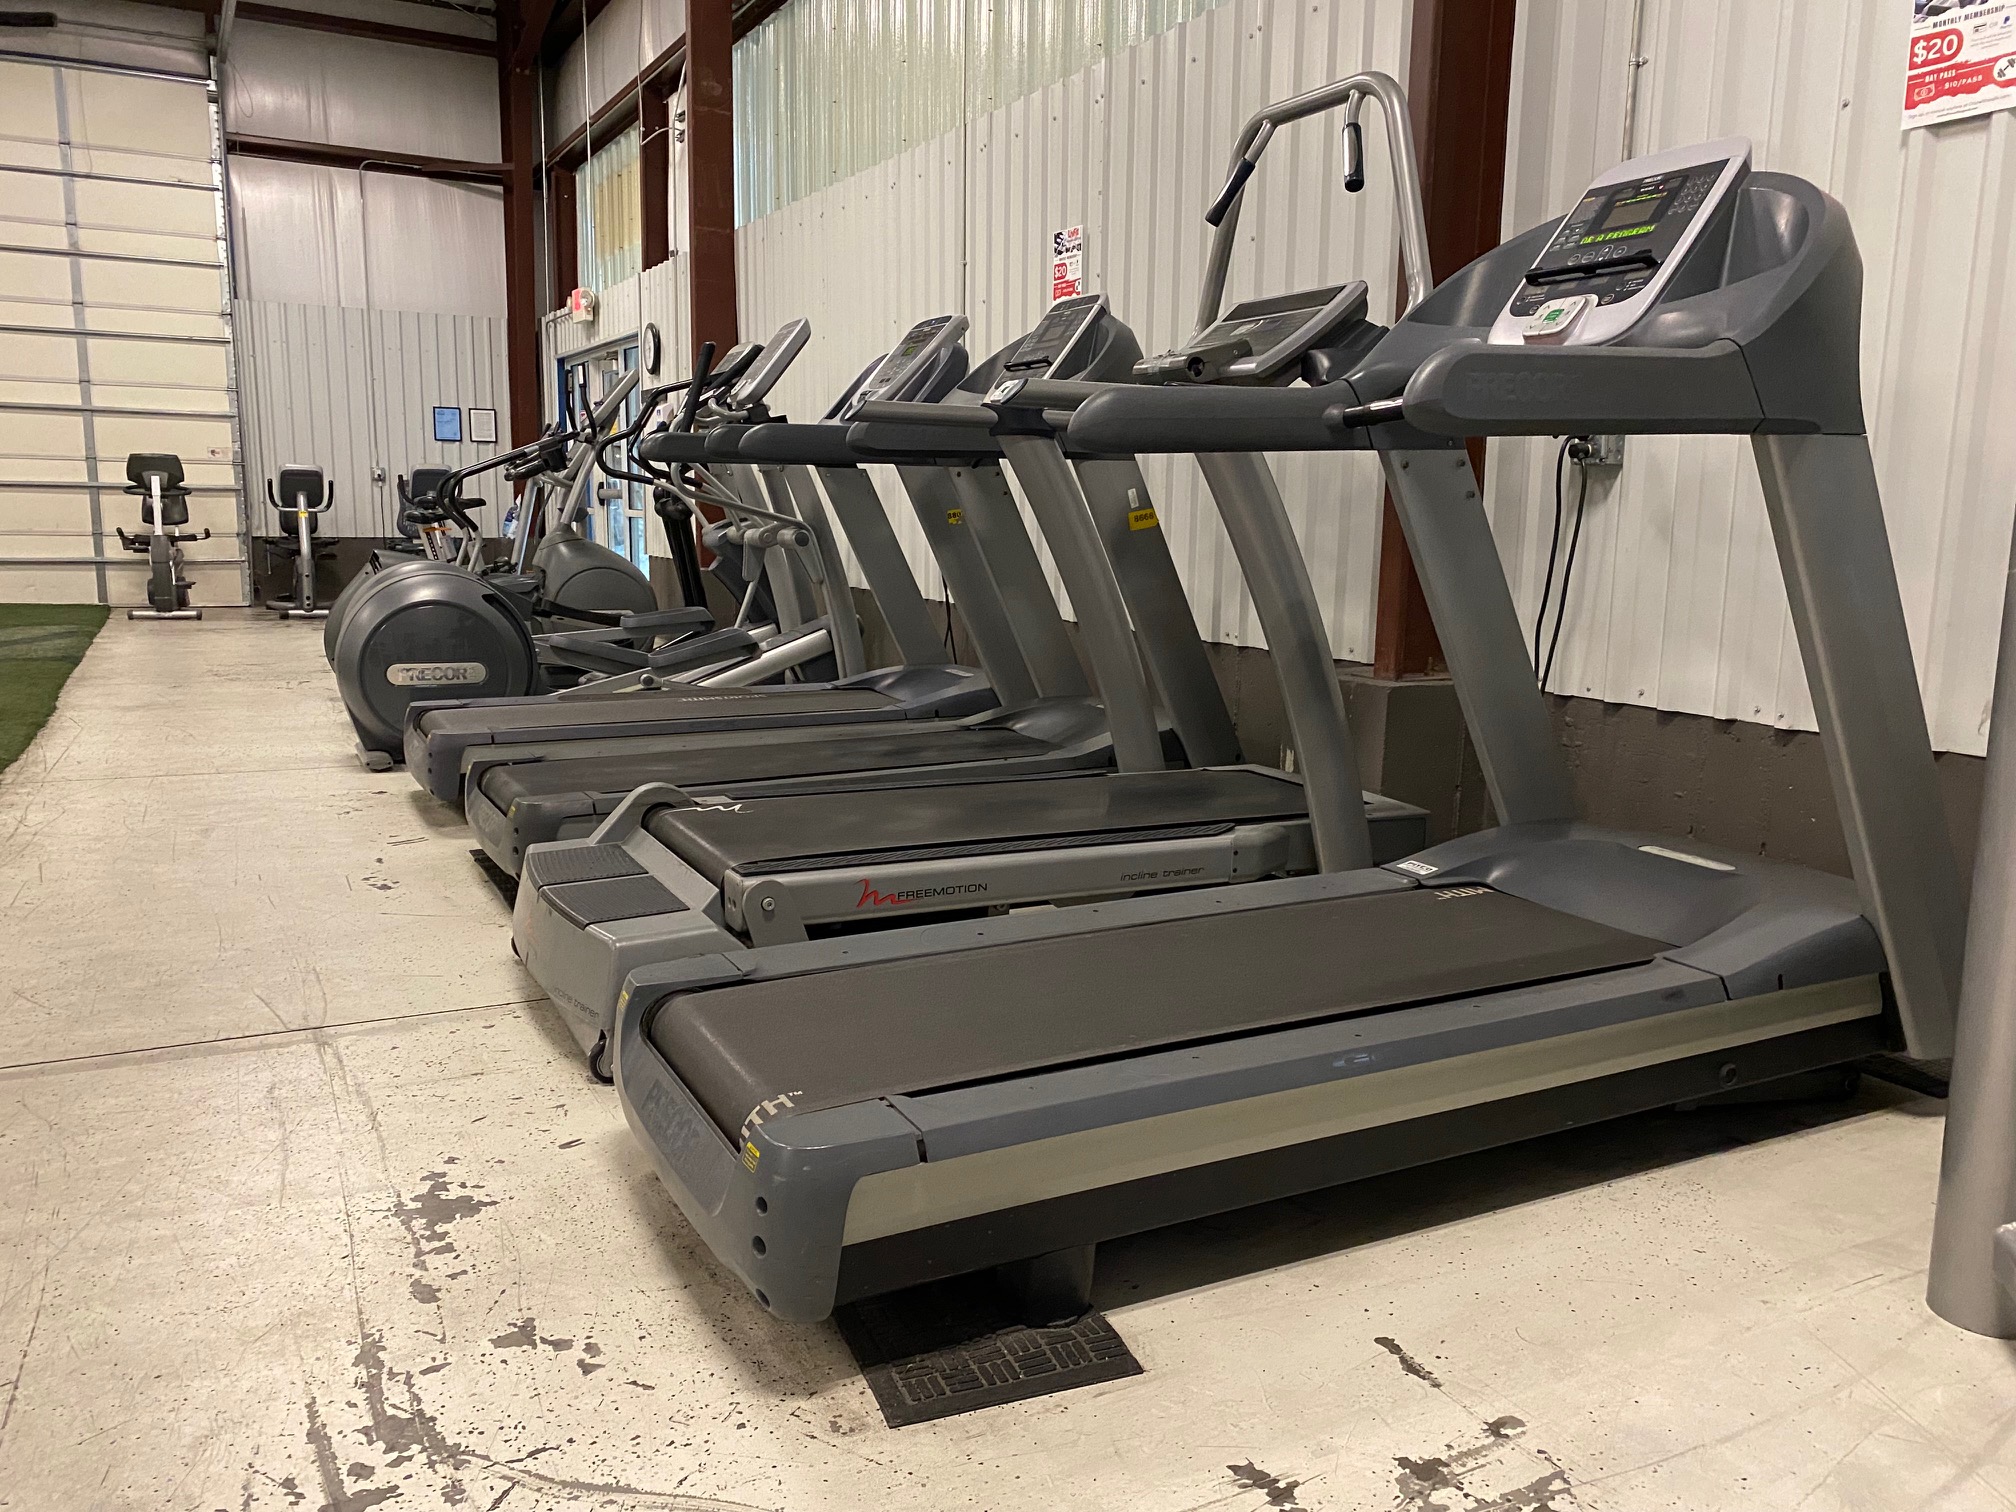 Row of treadmills and ellipticals.